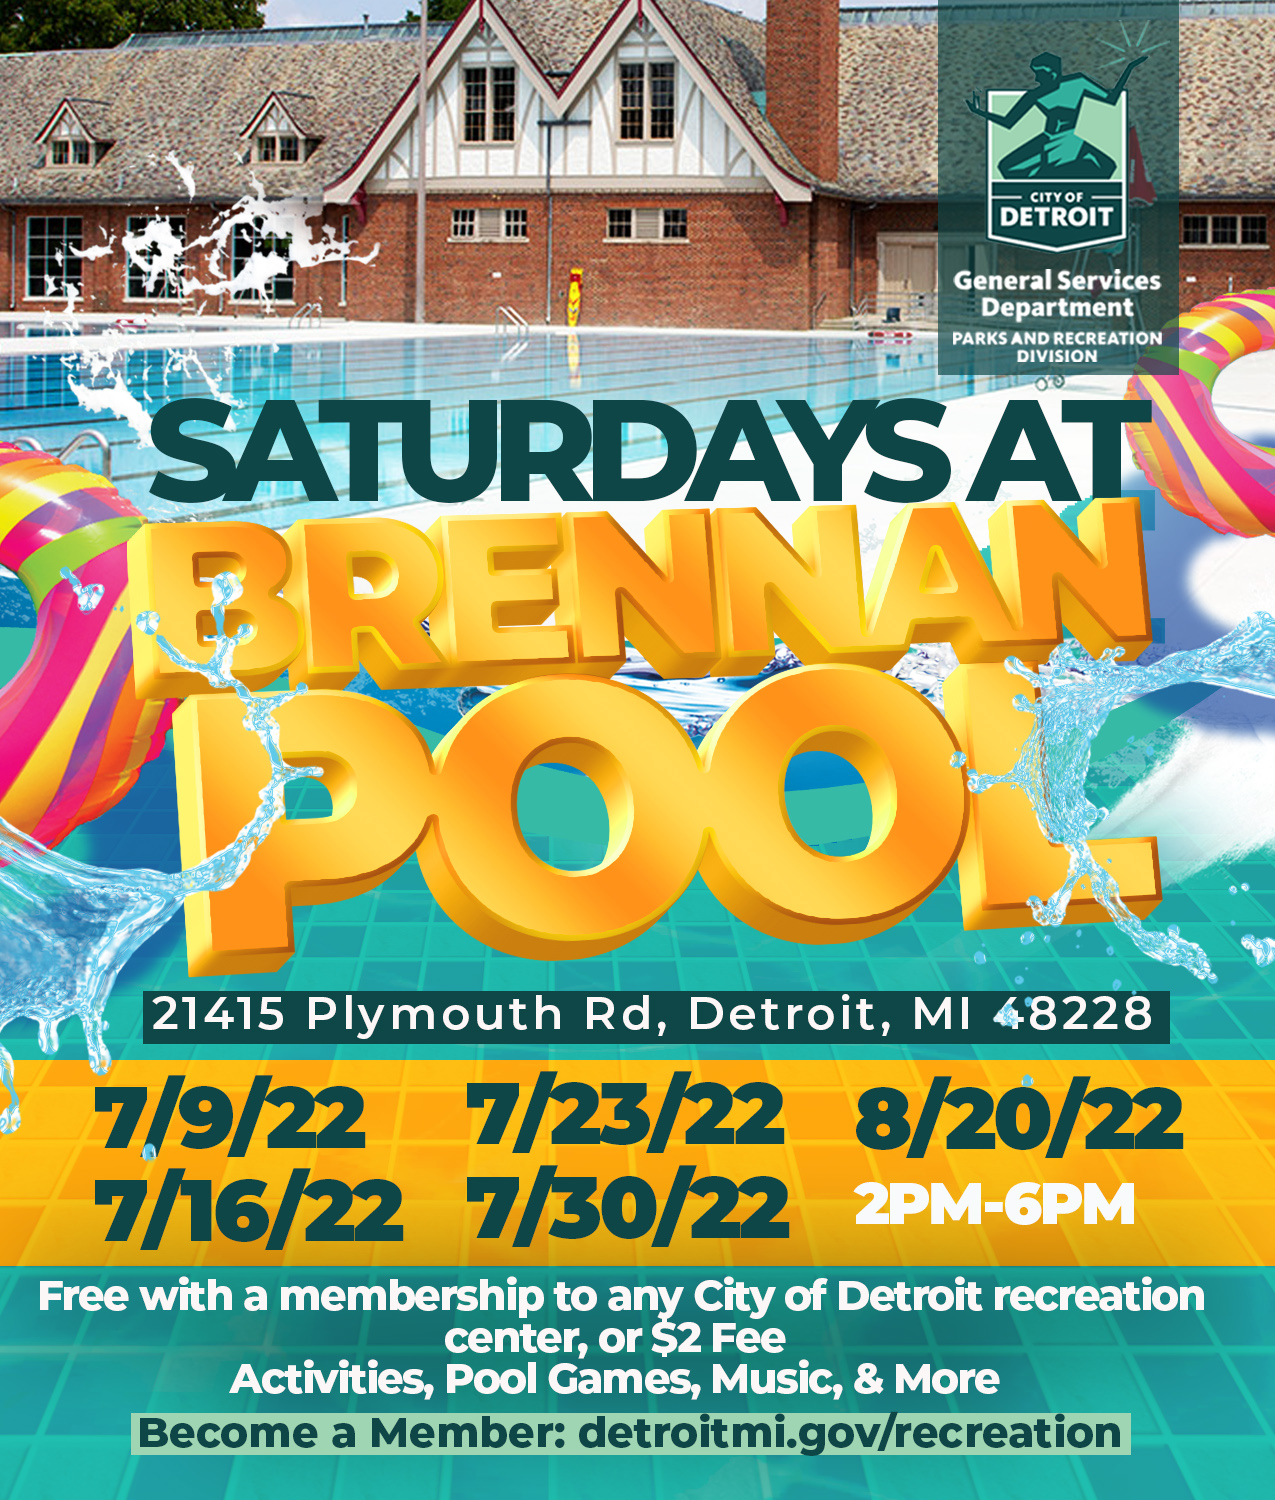 Saturdays at Brennan Pool